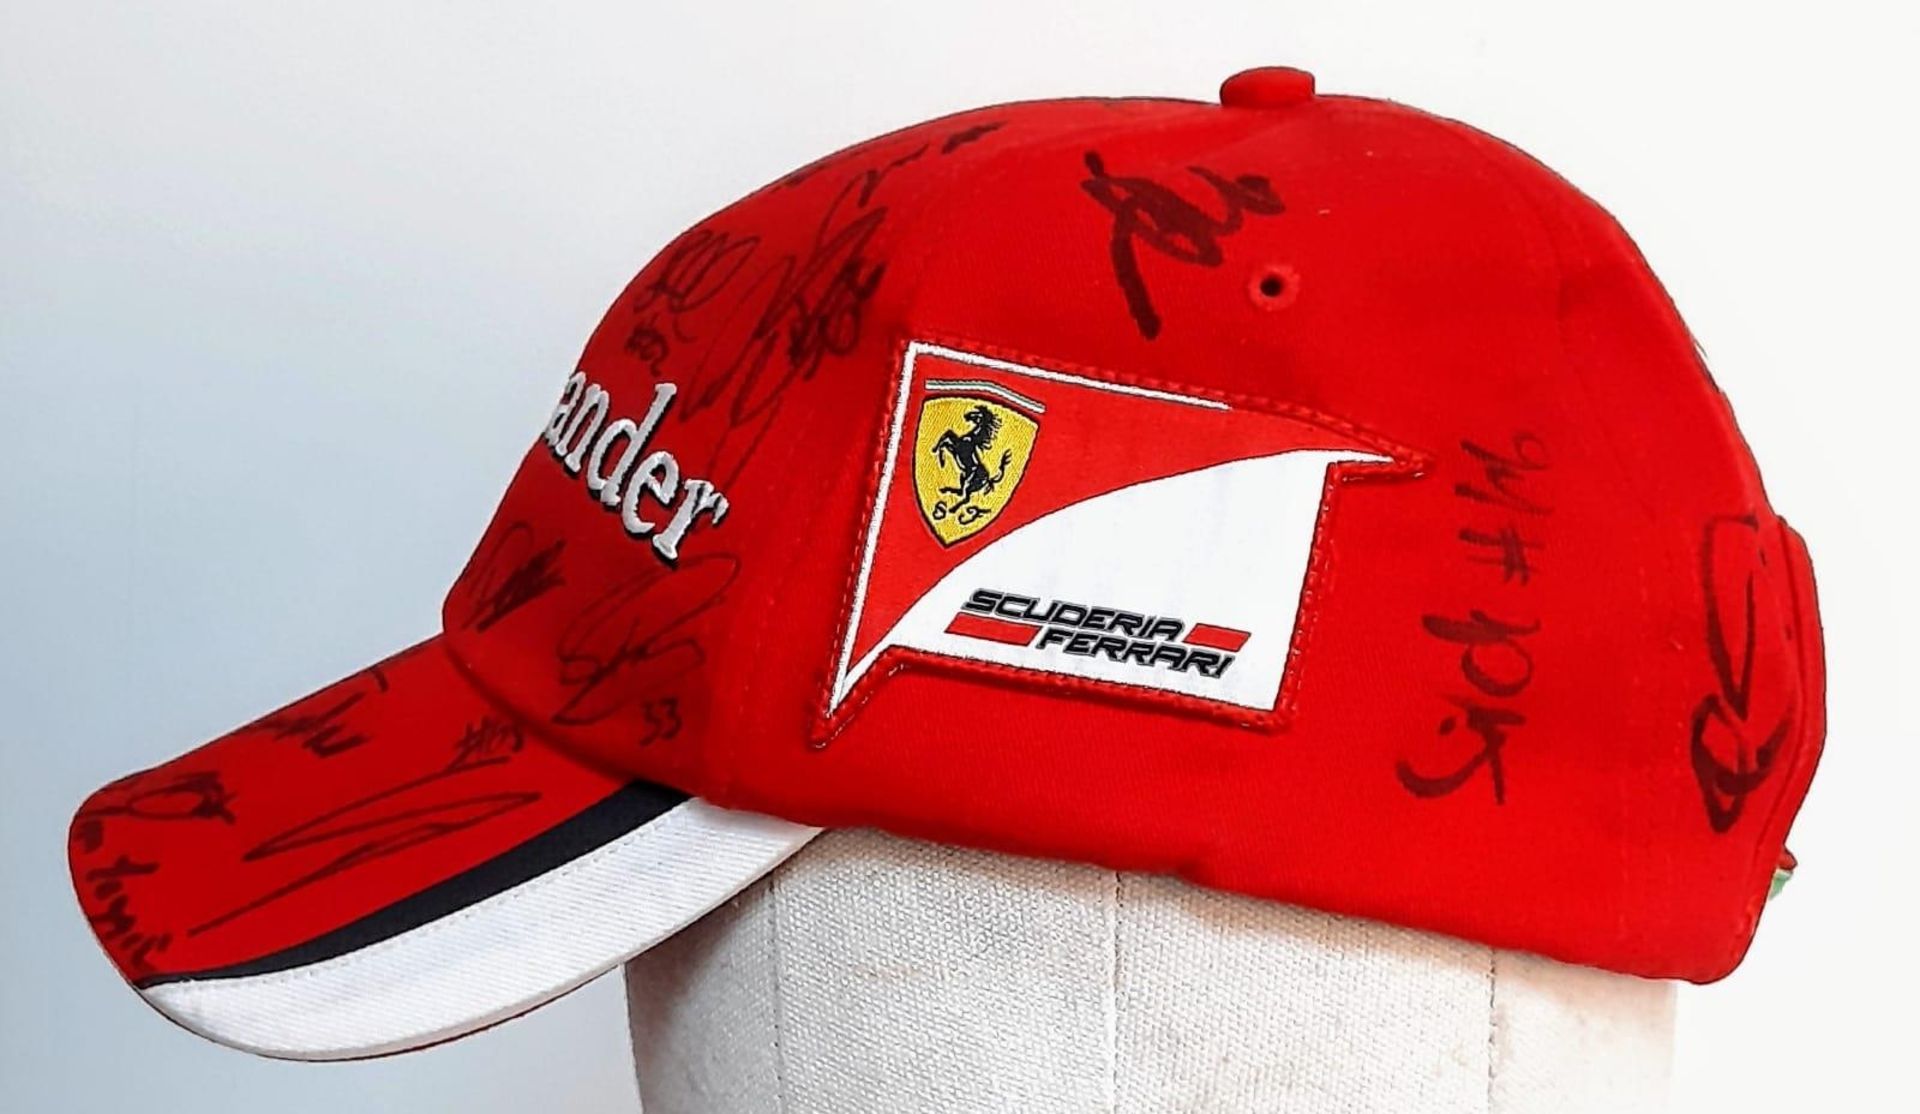 An Official Ferrari Team Cap - Over 20 signatures including Ferrari drivers and team principals. - Image 2 of 14